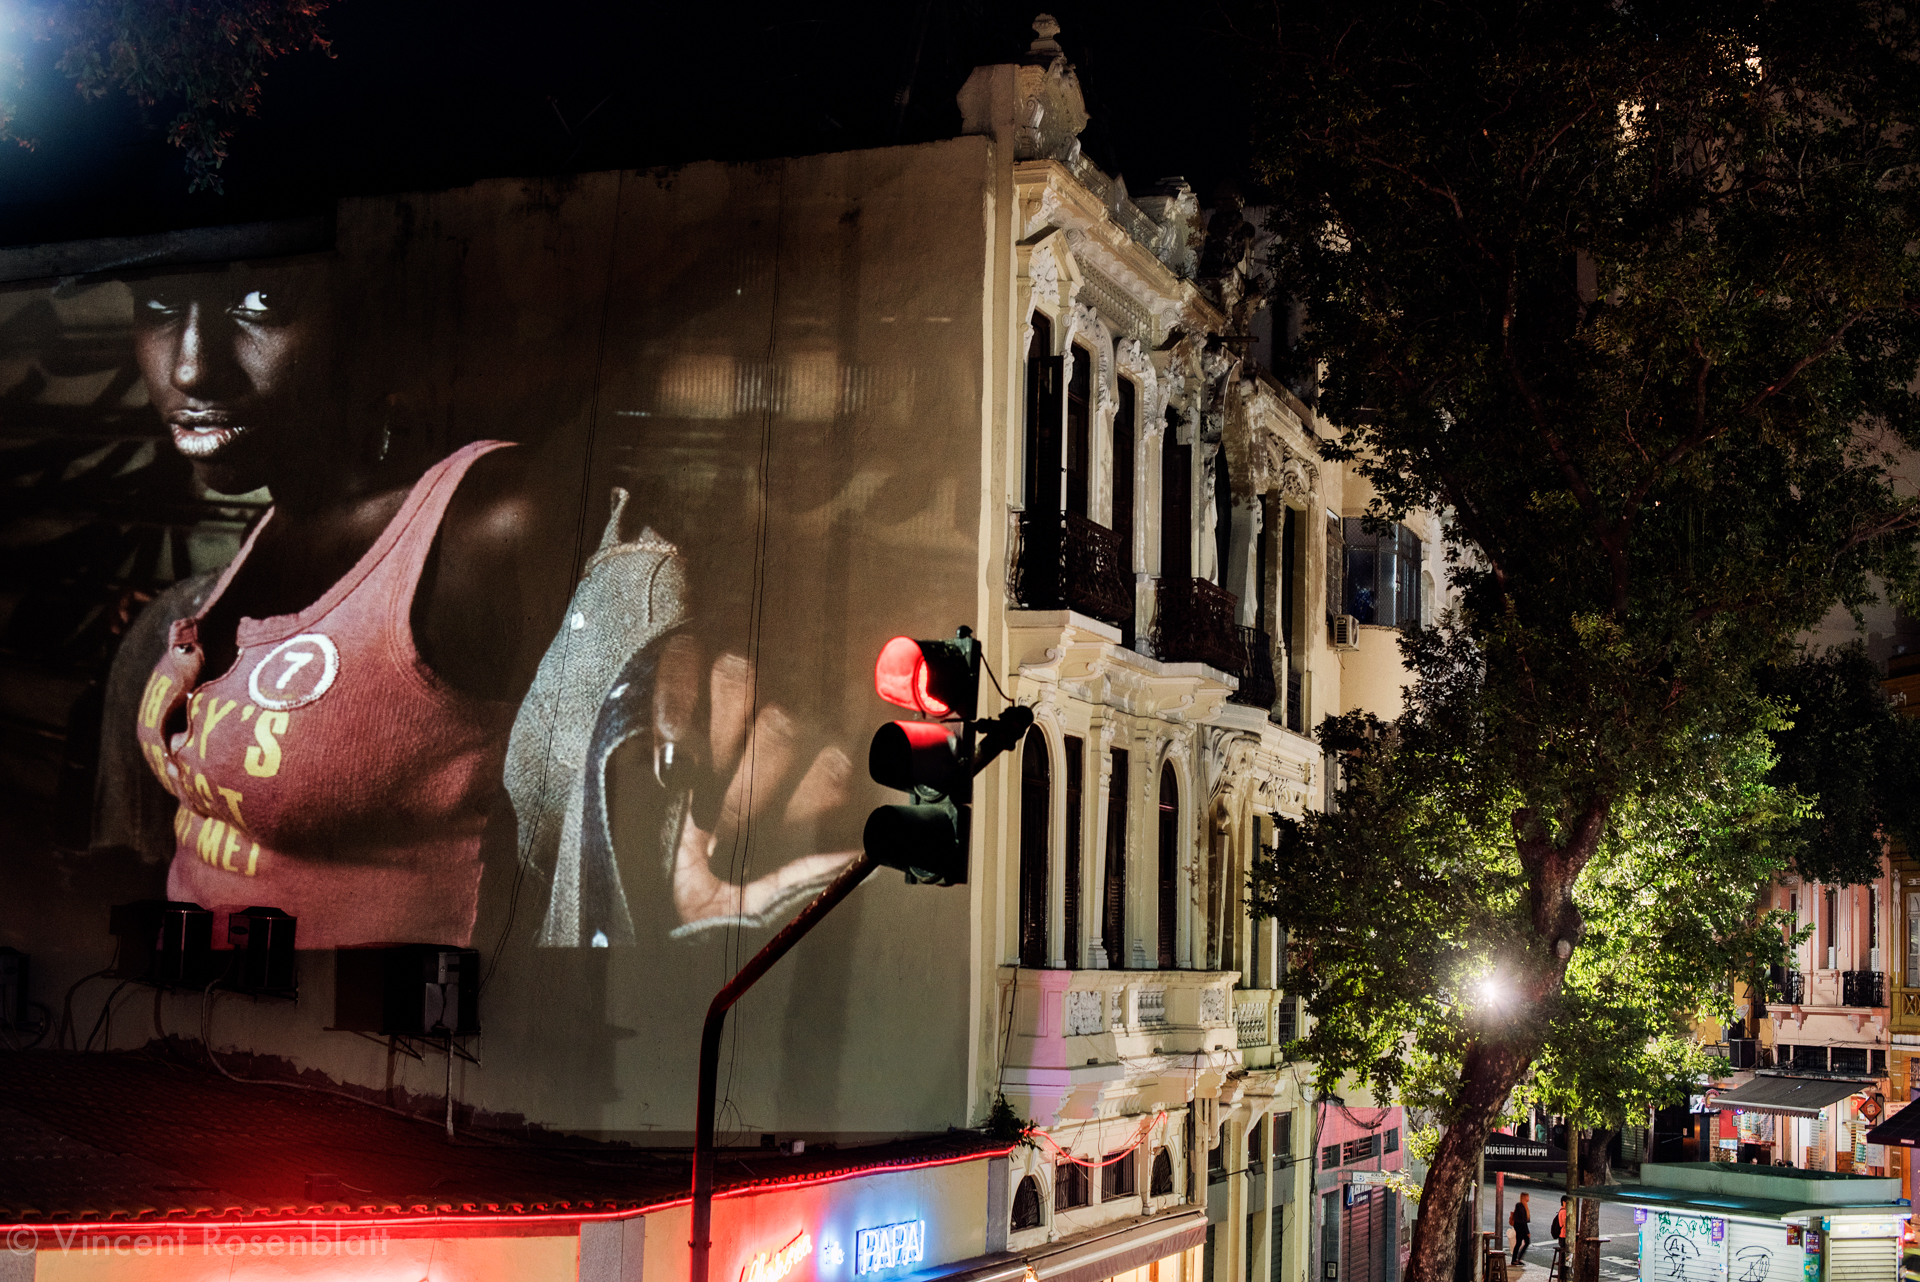  Slideshow "Rio Baile Funk" - work by Vincent Rosenblatt in the district of Lapa, Rio de Janeiro 